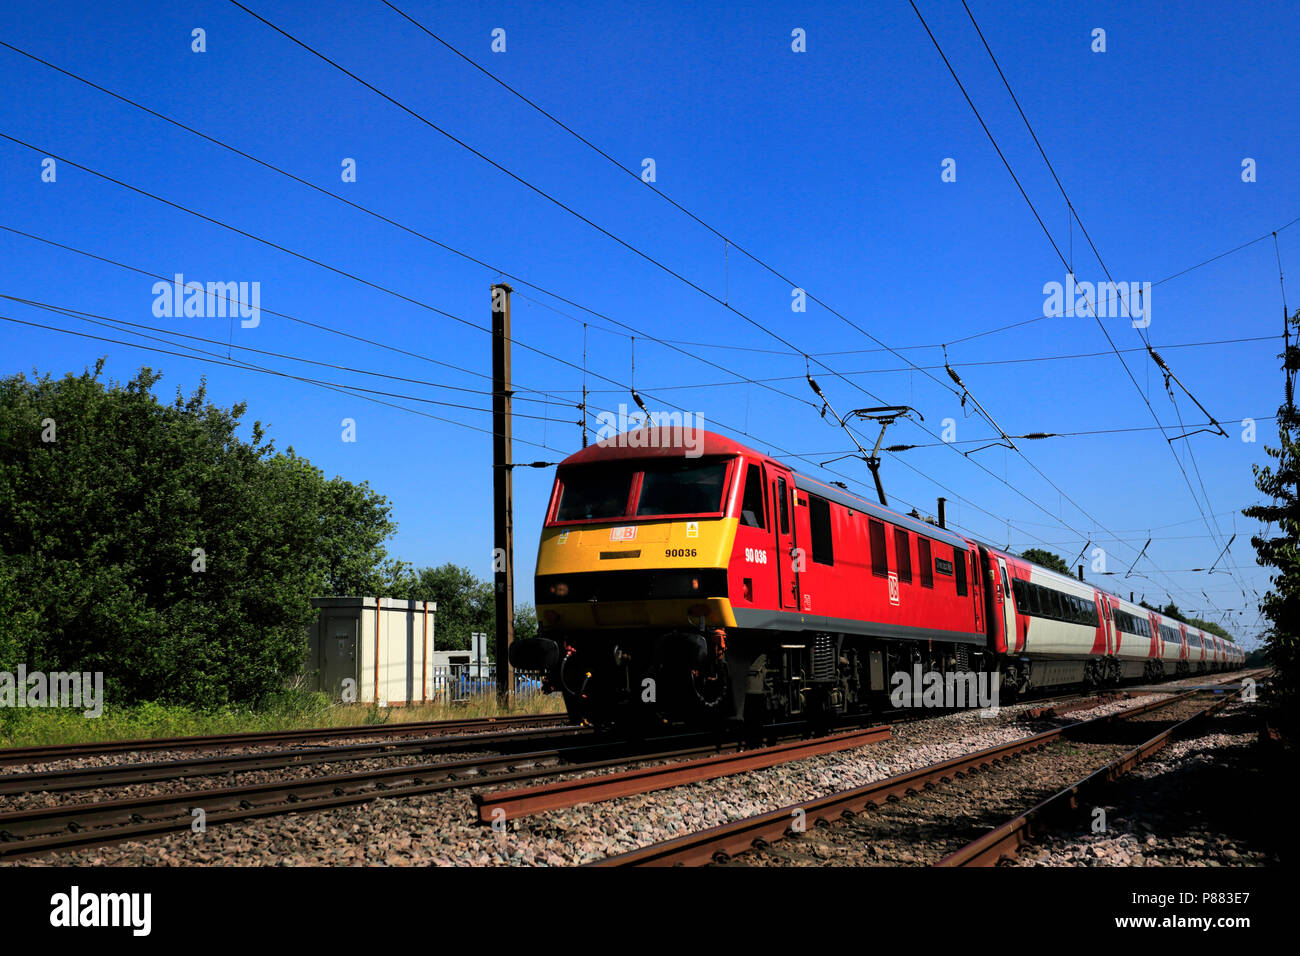 DB 90036 pulling Virgin Trains carriages, East Coast Main Line Railway, Peterborough, Cambridgeshire, England, UK Stock Photo